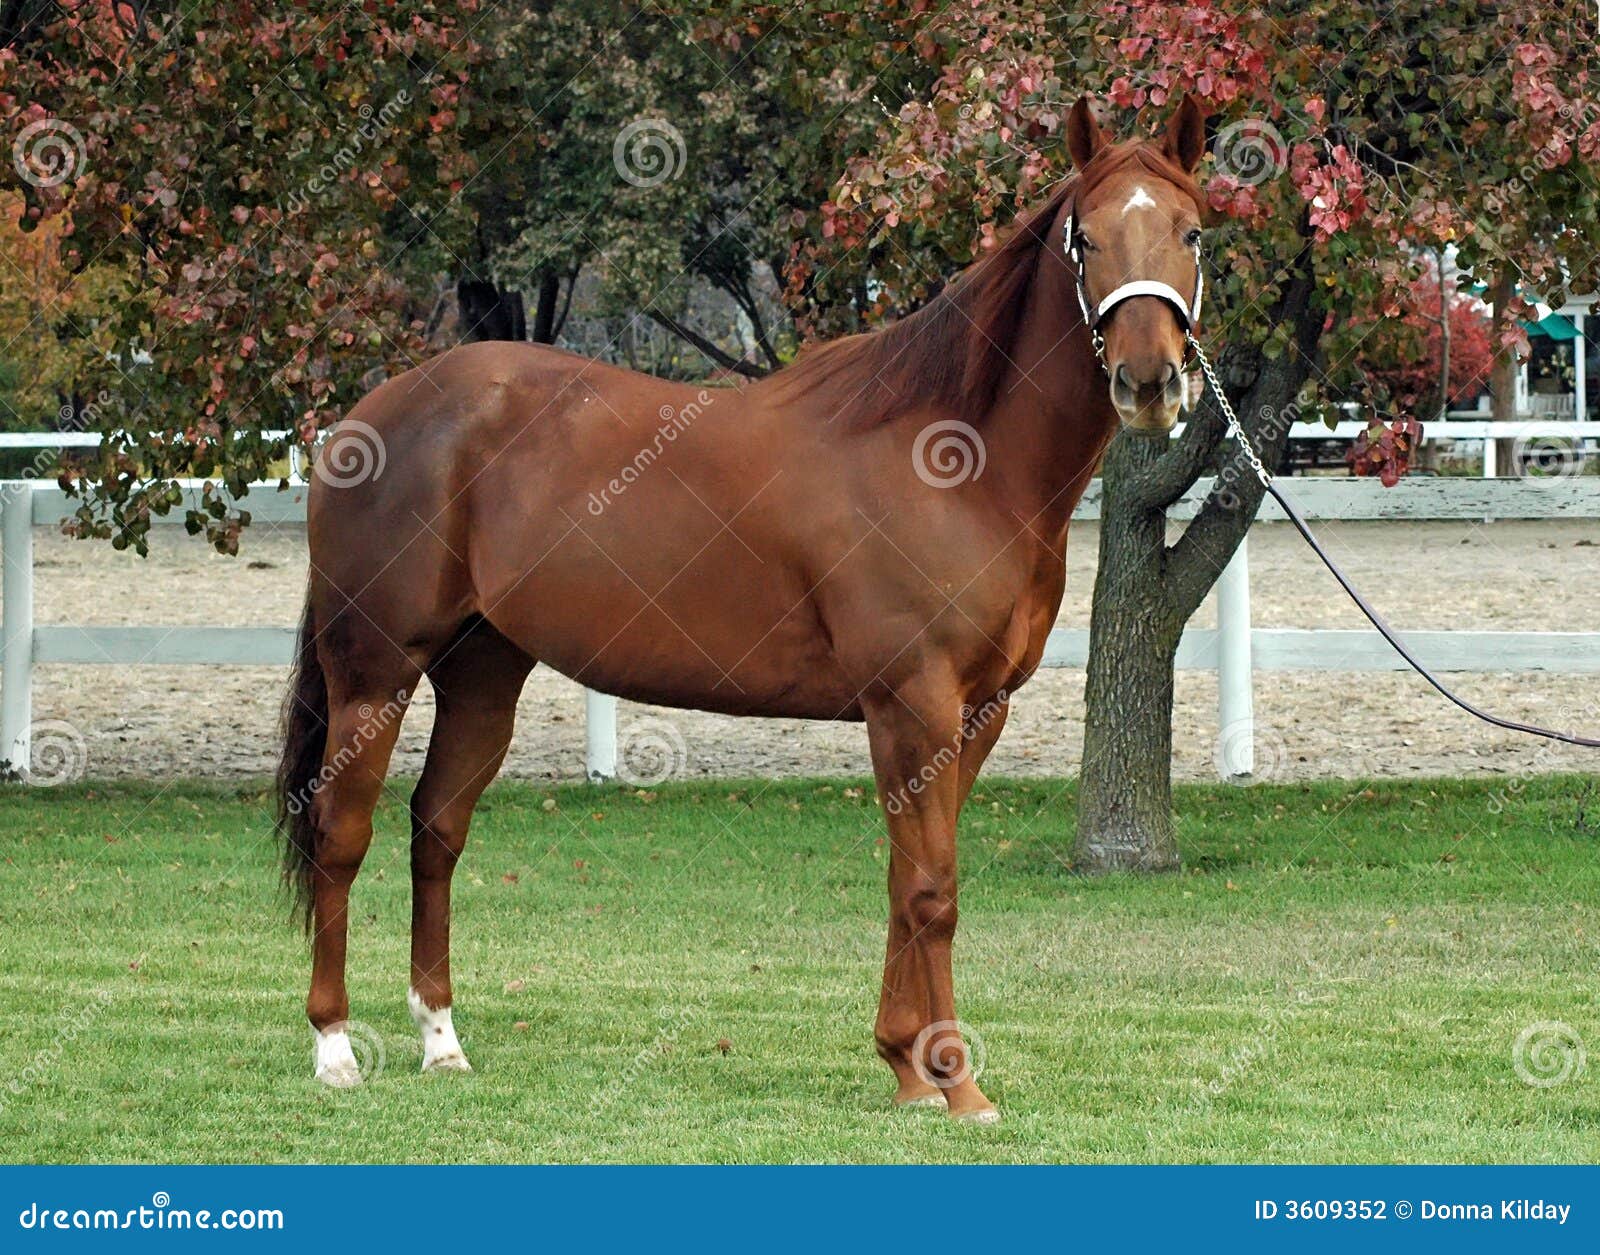 quarter horse stallion